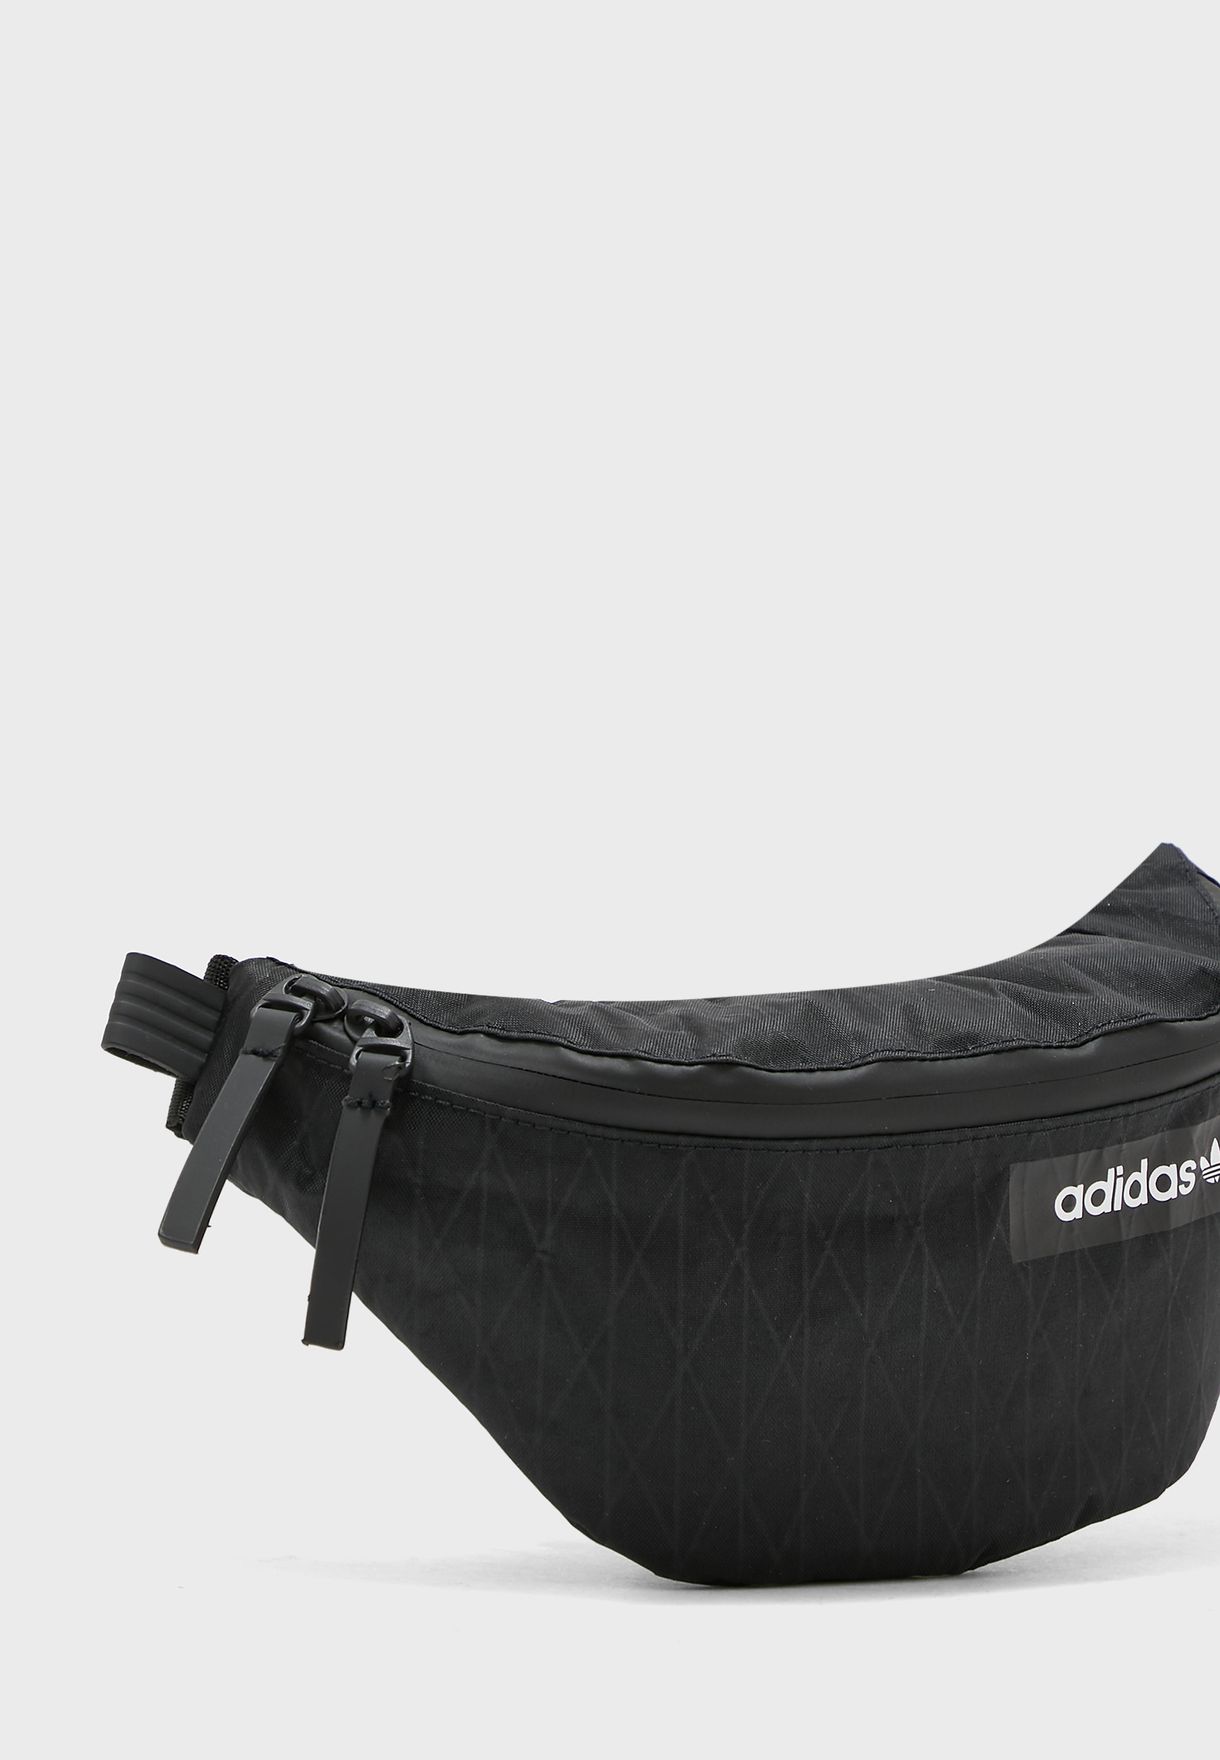 adidas future waist bag